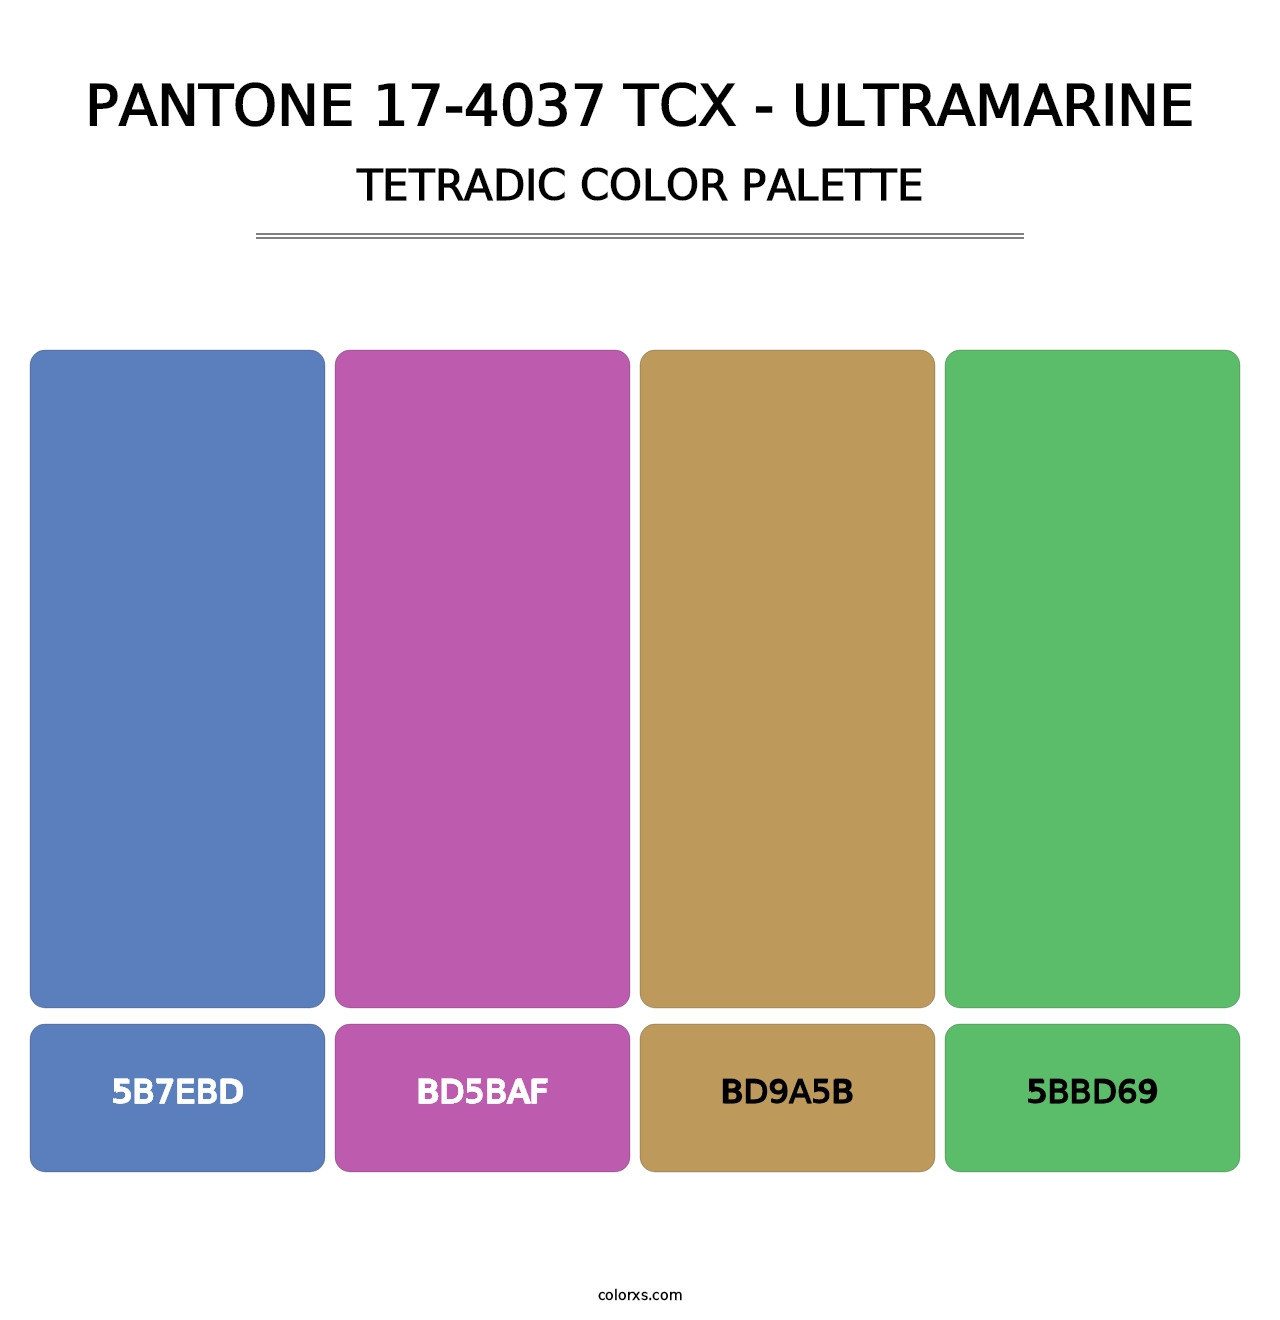 PANTONE 17-4037 TCX - Ultramarine - Tetradic Color Palette